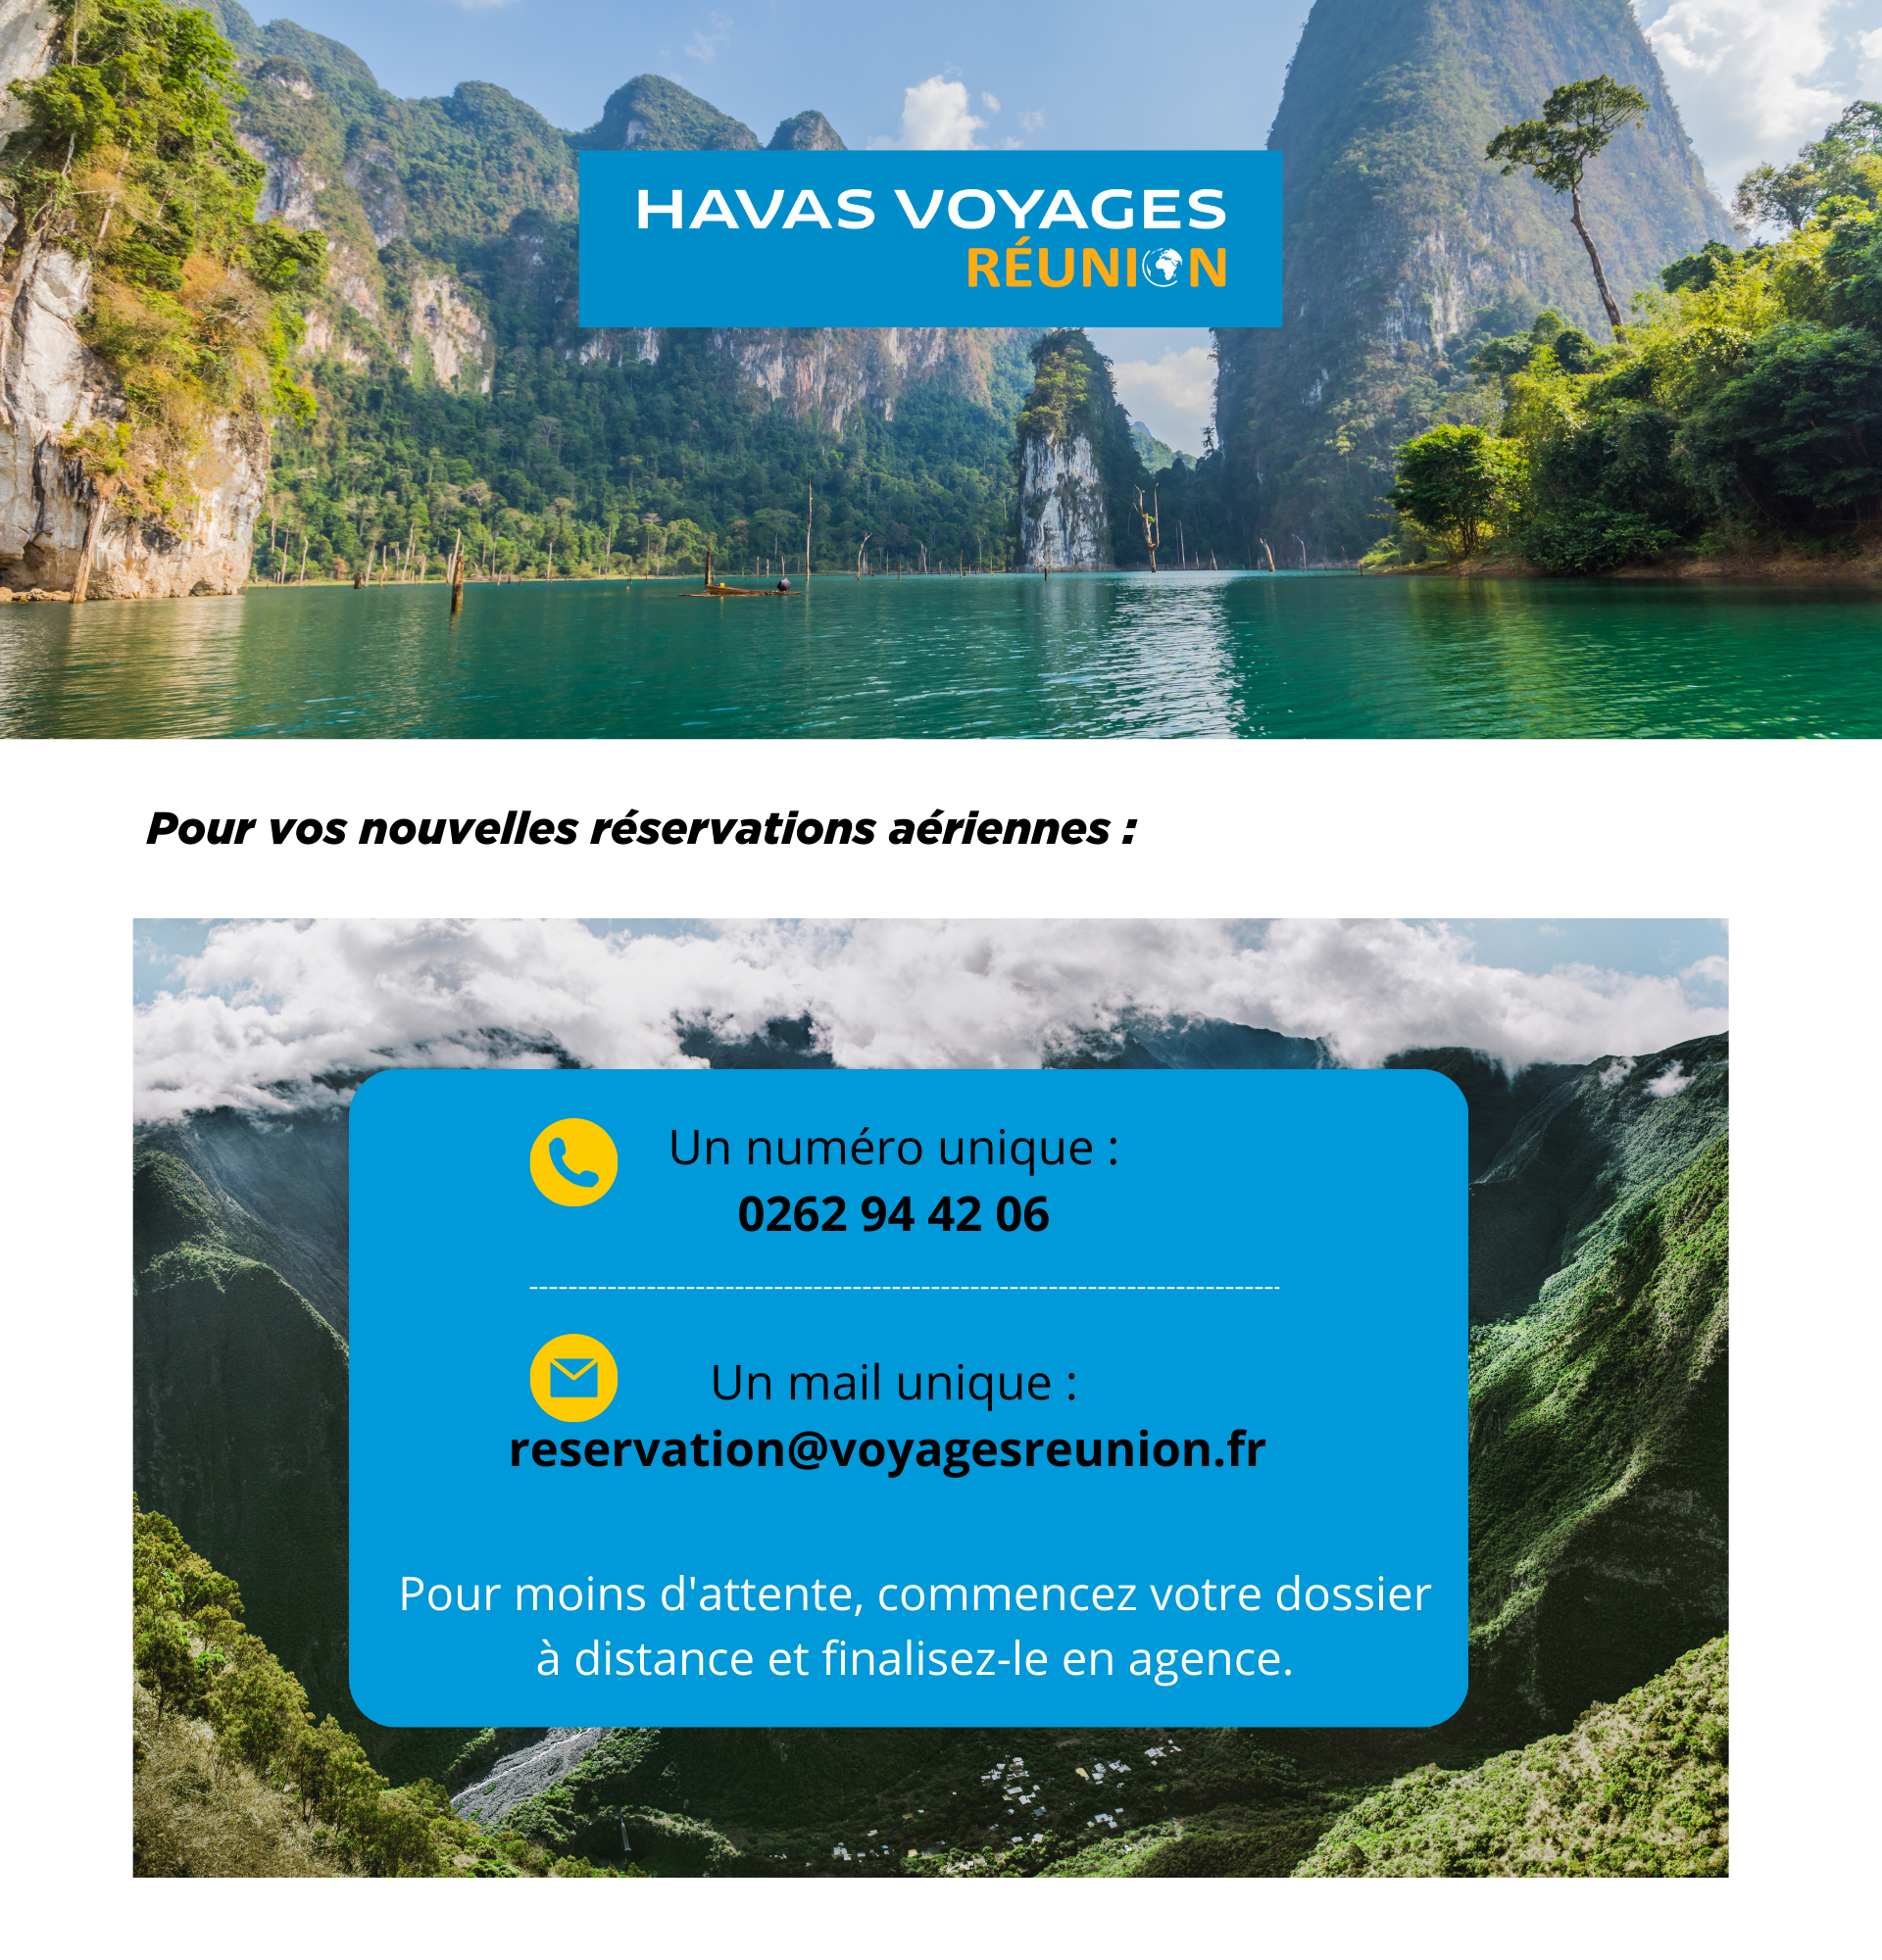 Havas Voyages Reunion